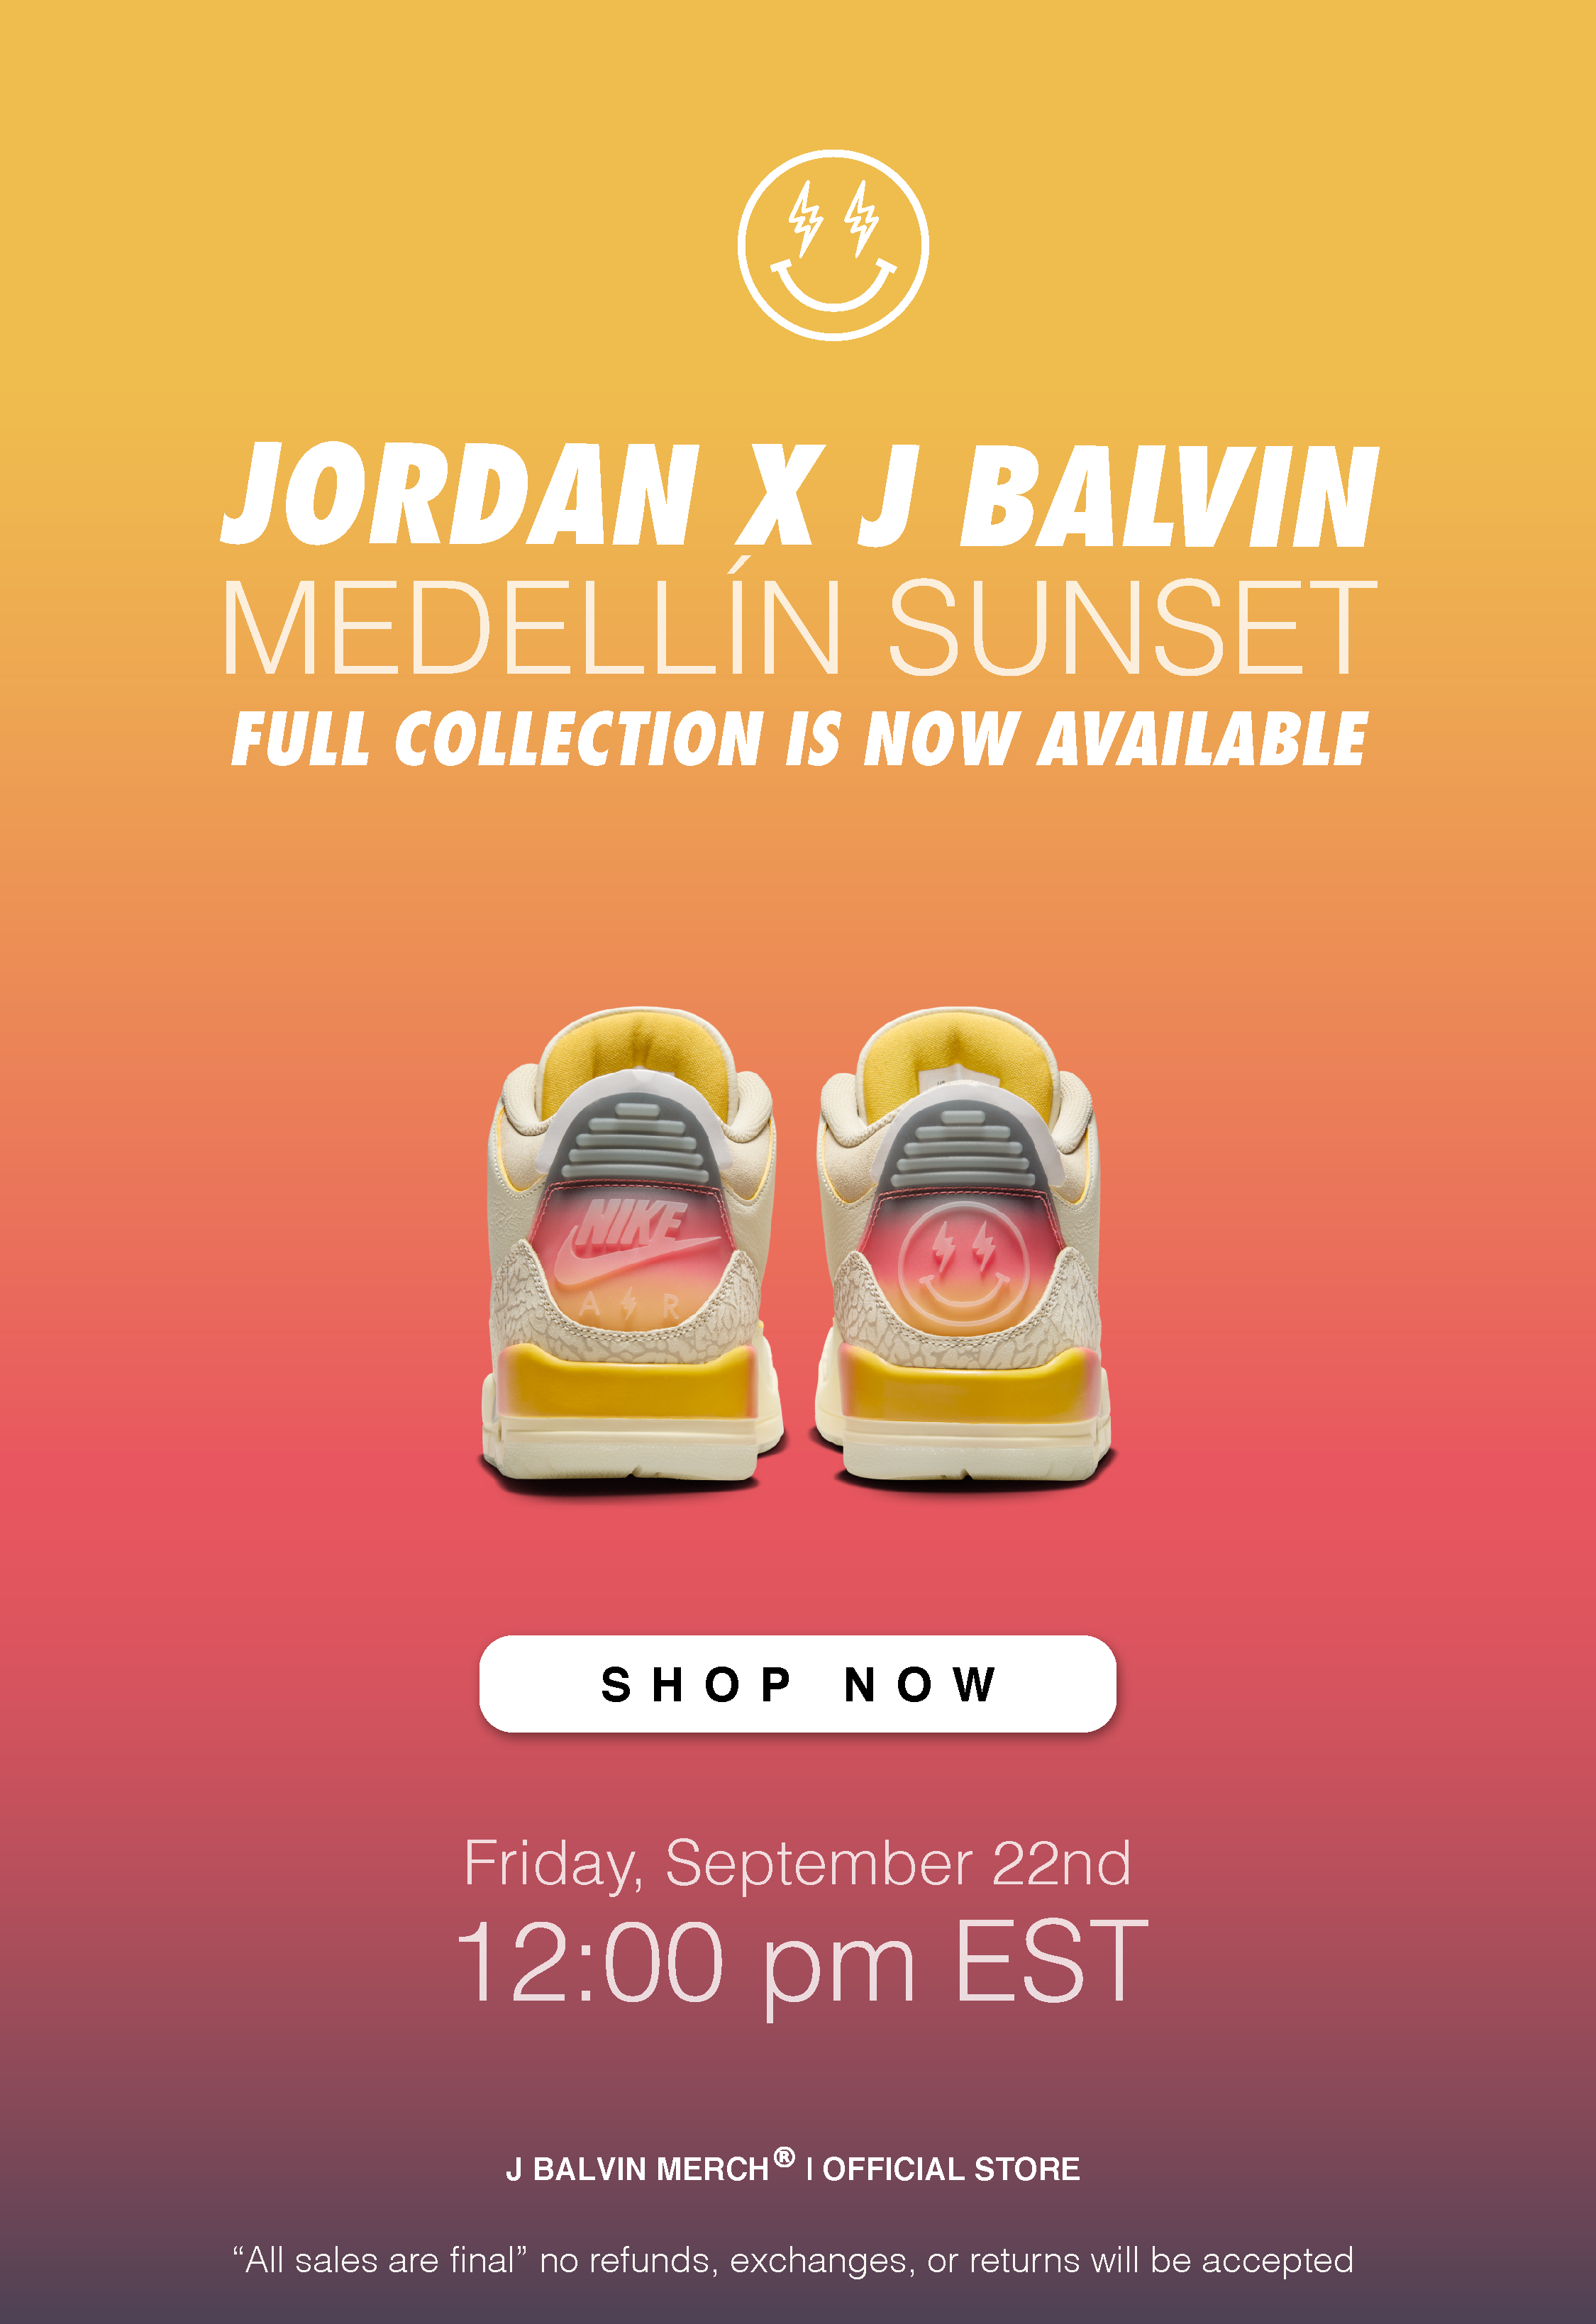 Jordan x J Balvin Medellín Sunset Full Collection Now Available - SHOP NOW